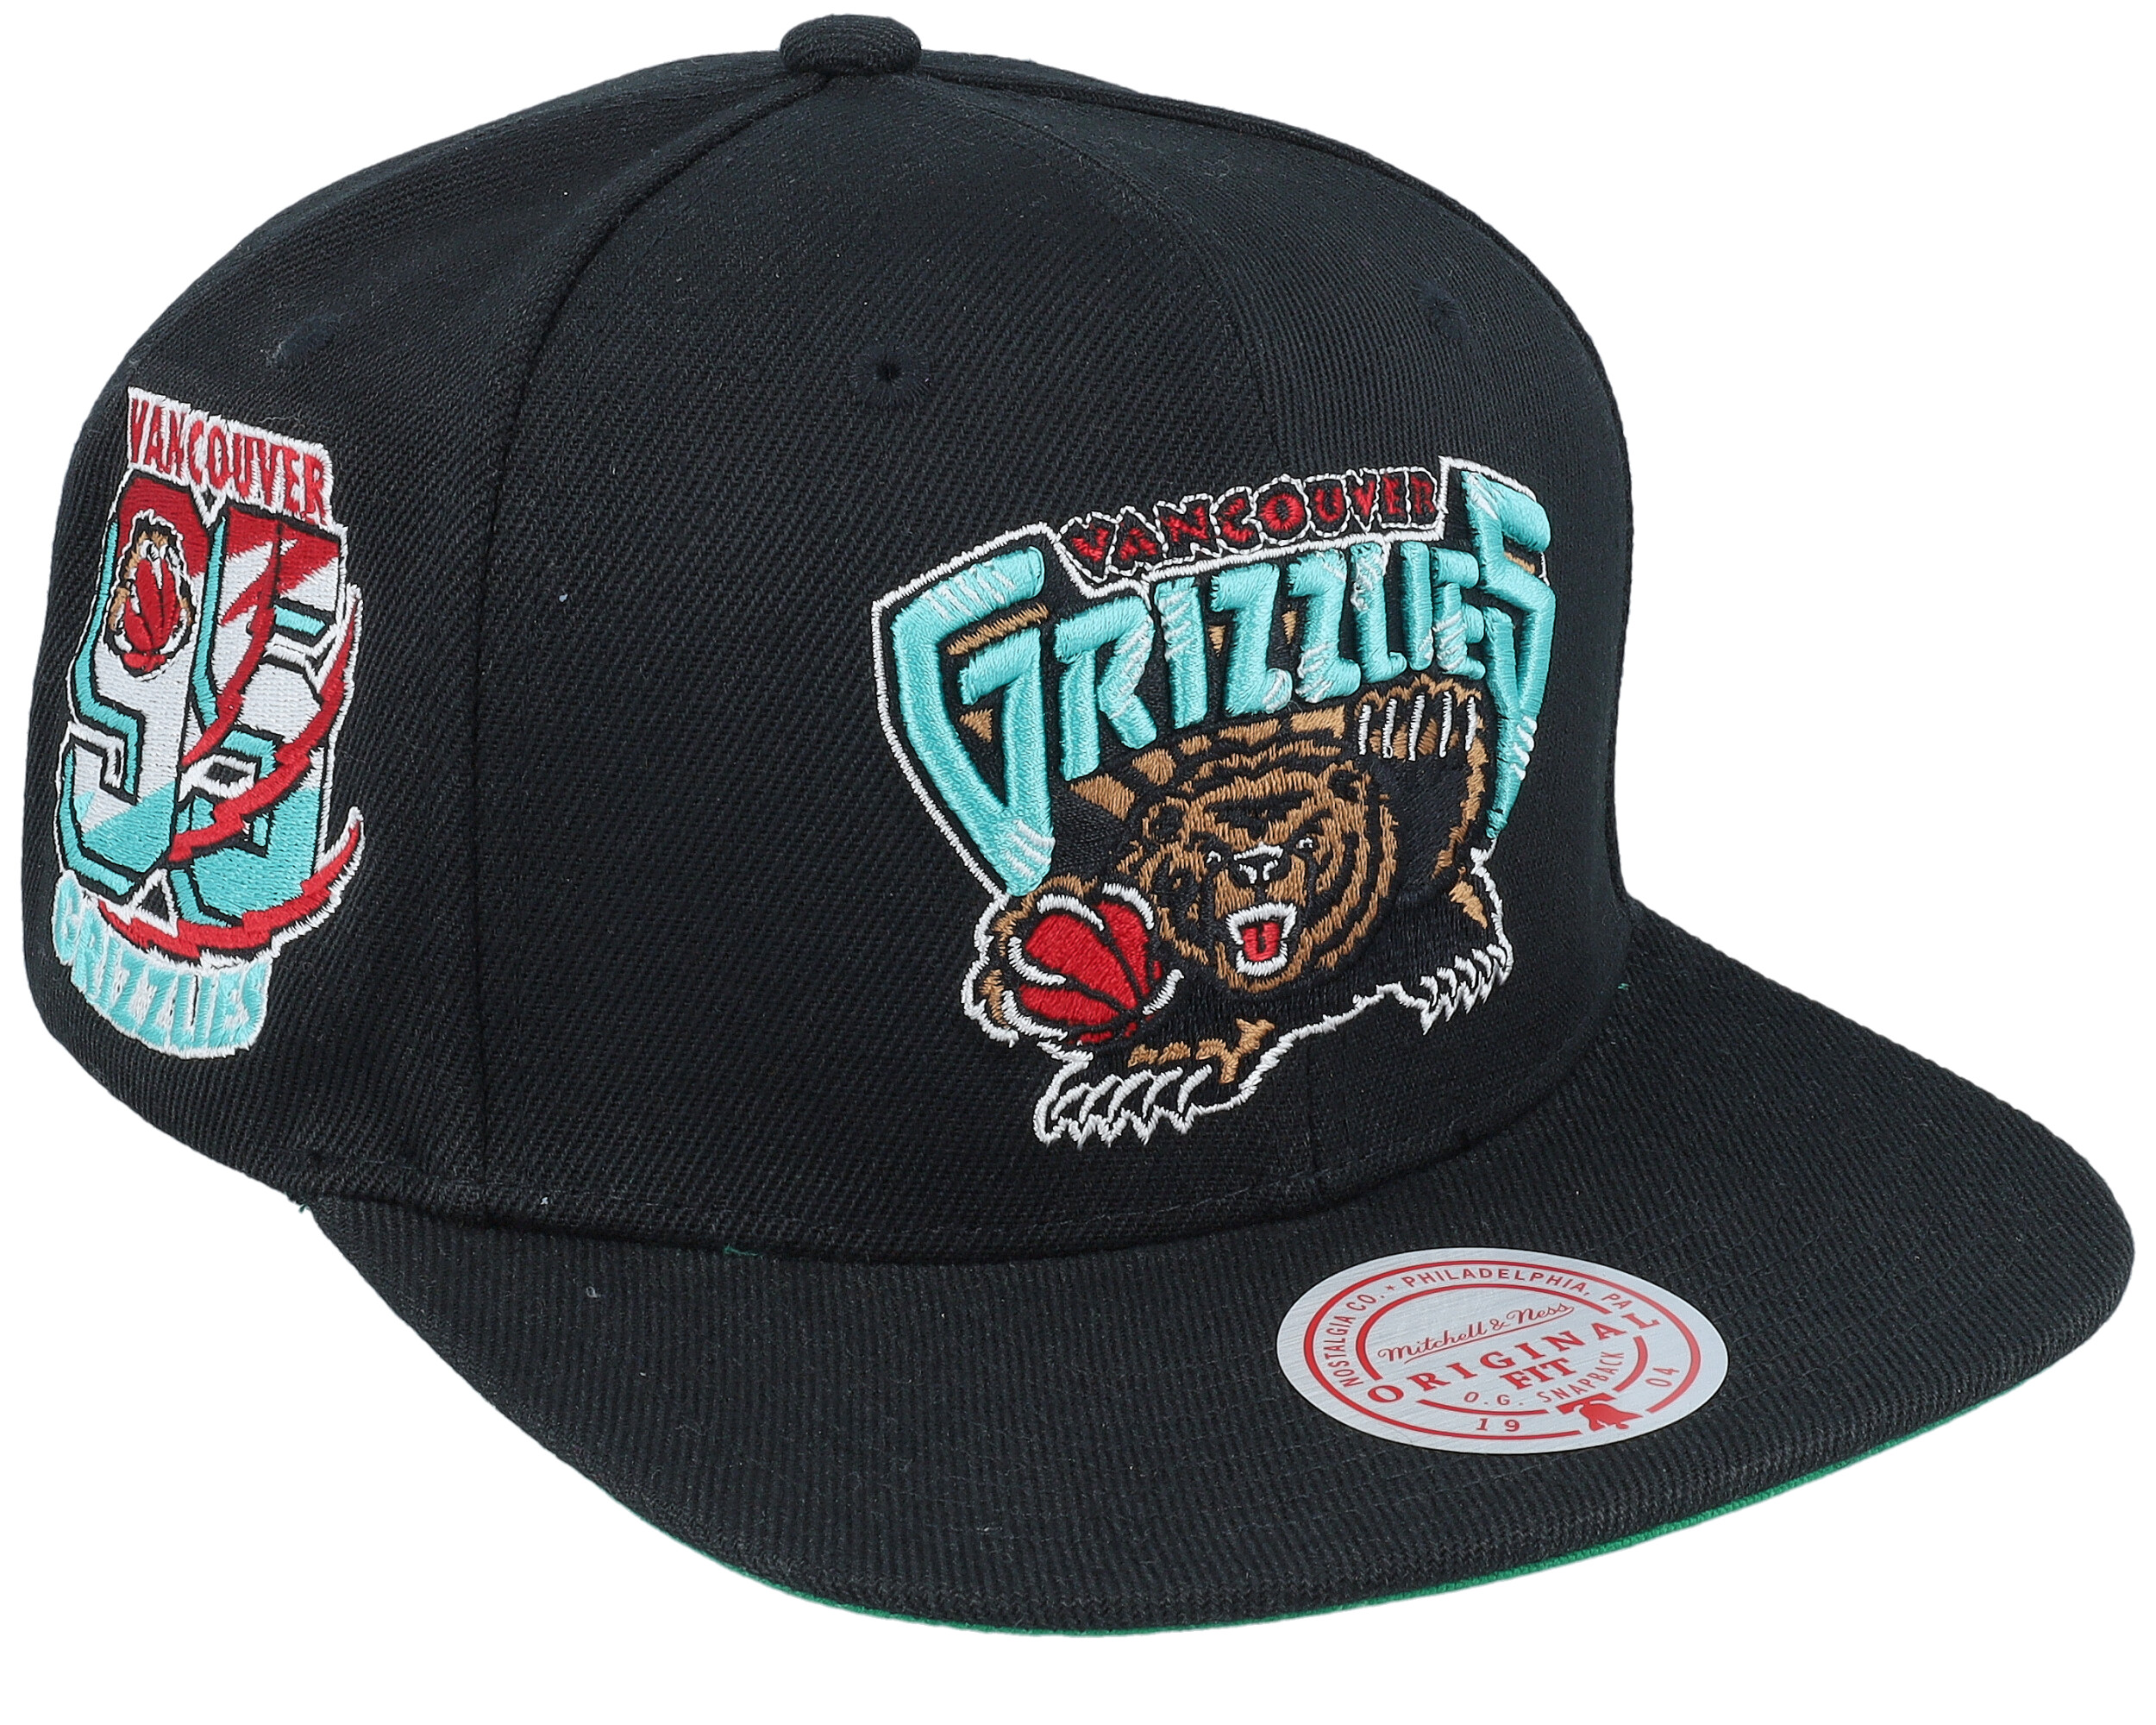 Vancouver Grizzlies Side Jam Black Snapback - Mitchell & Ness cap